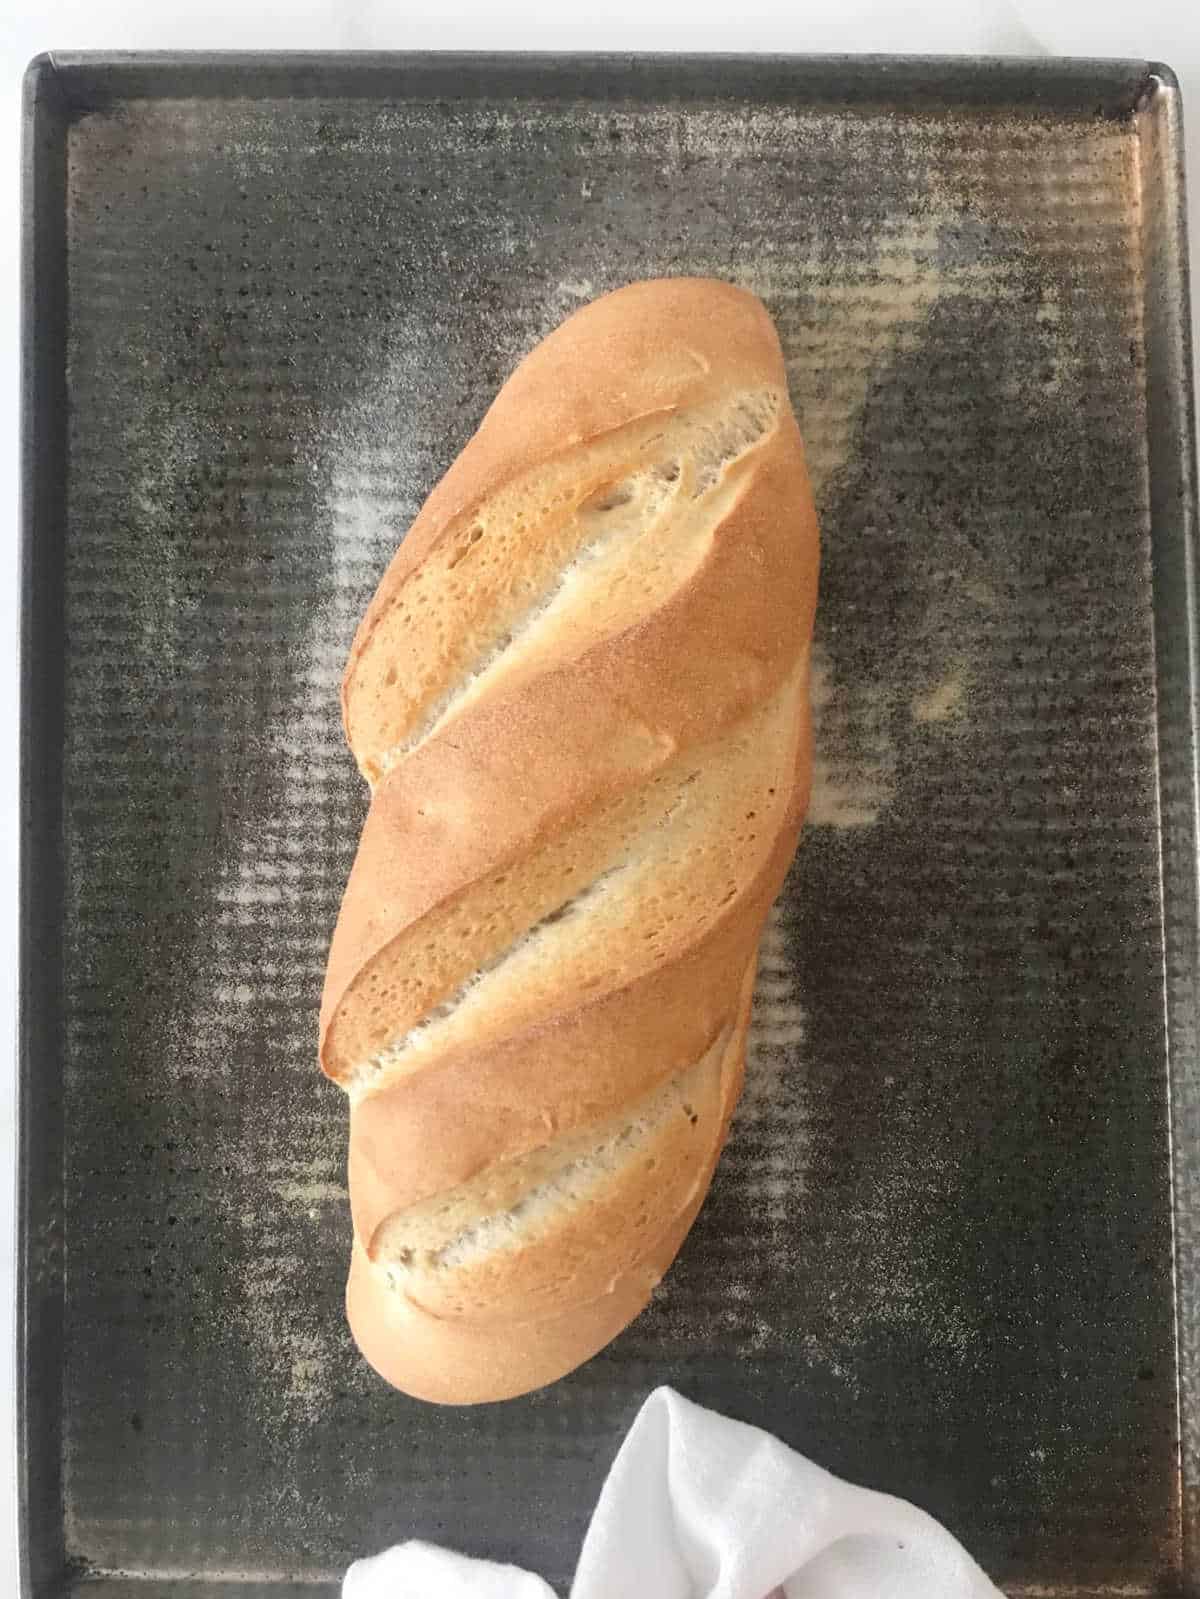 Baked loaf of bread on metal sheet.